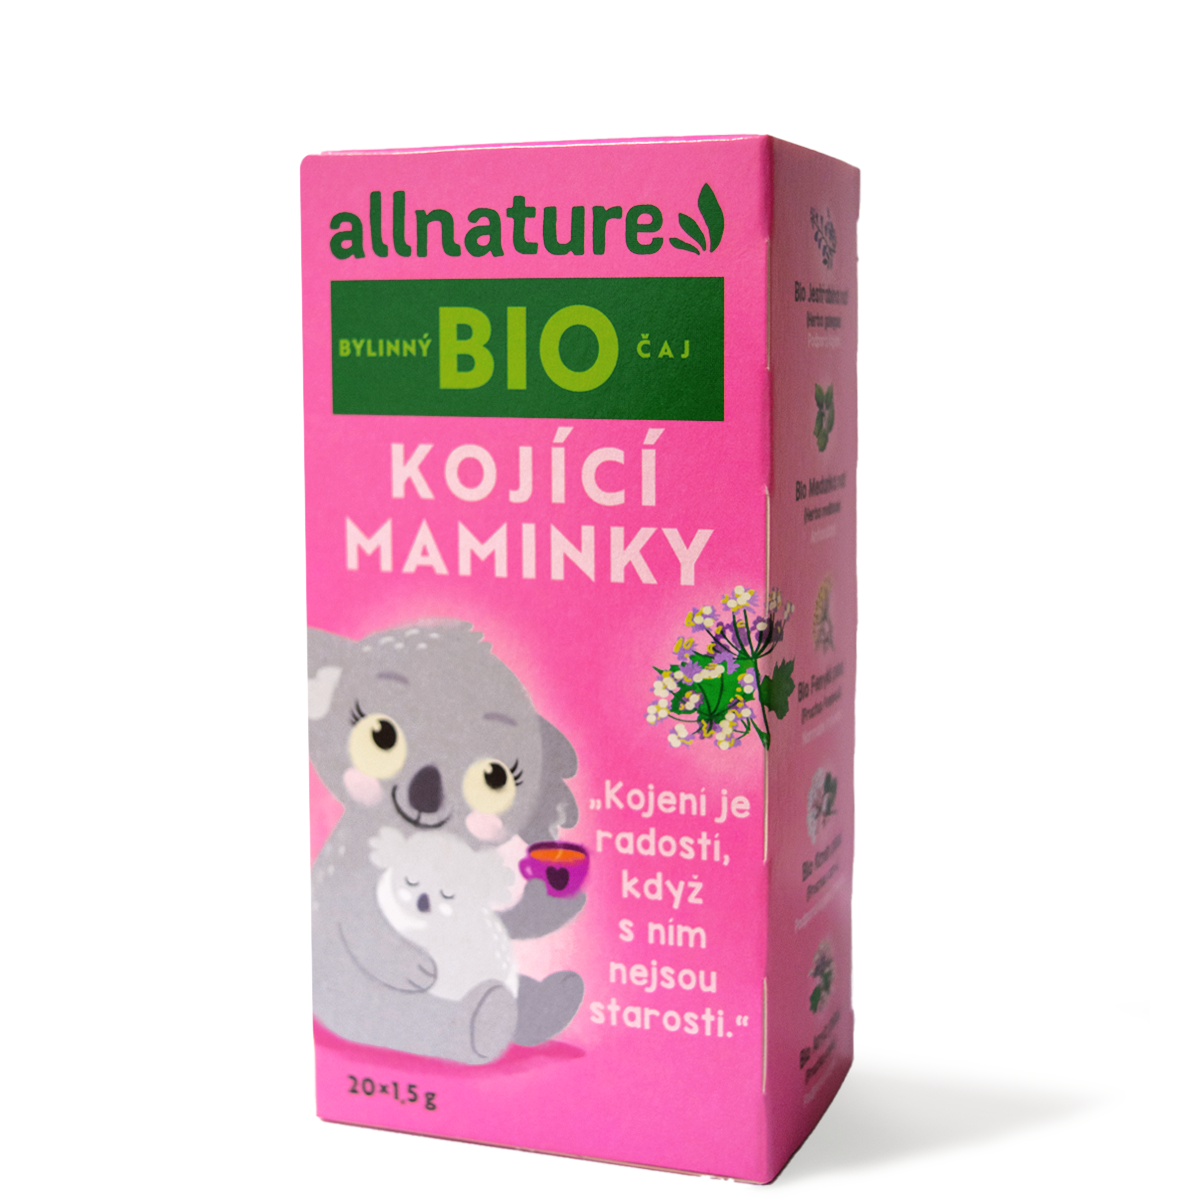 Allnature BIO Kojící maminky bylinný čaj 20x1